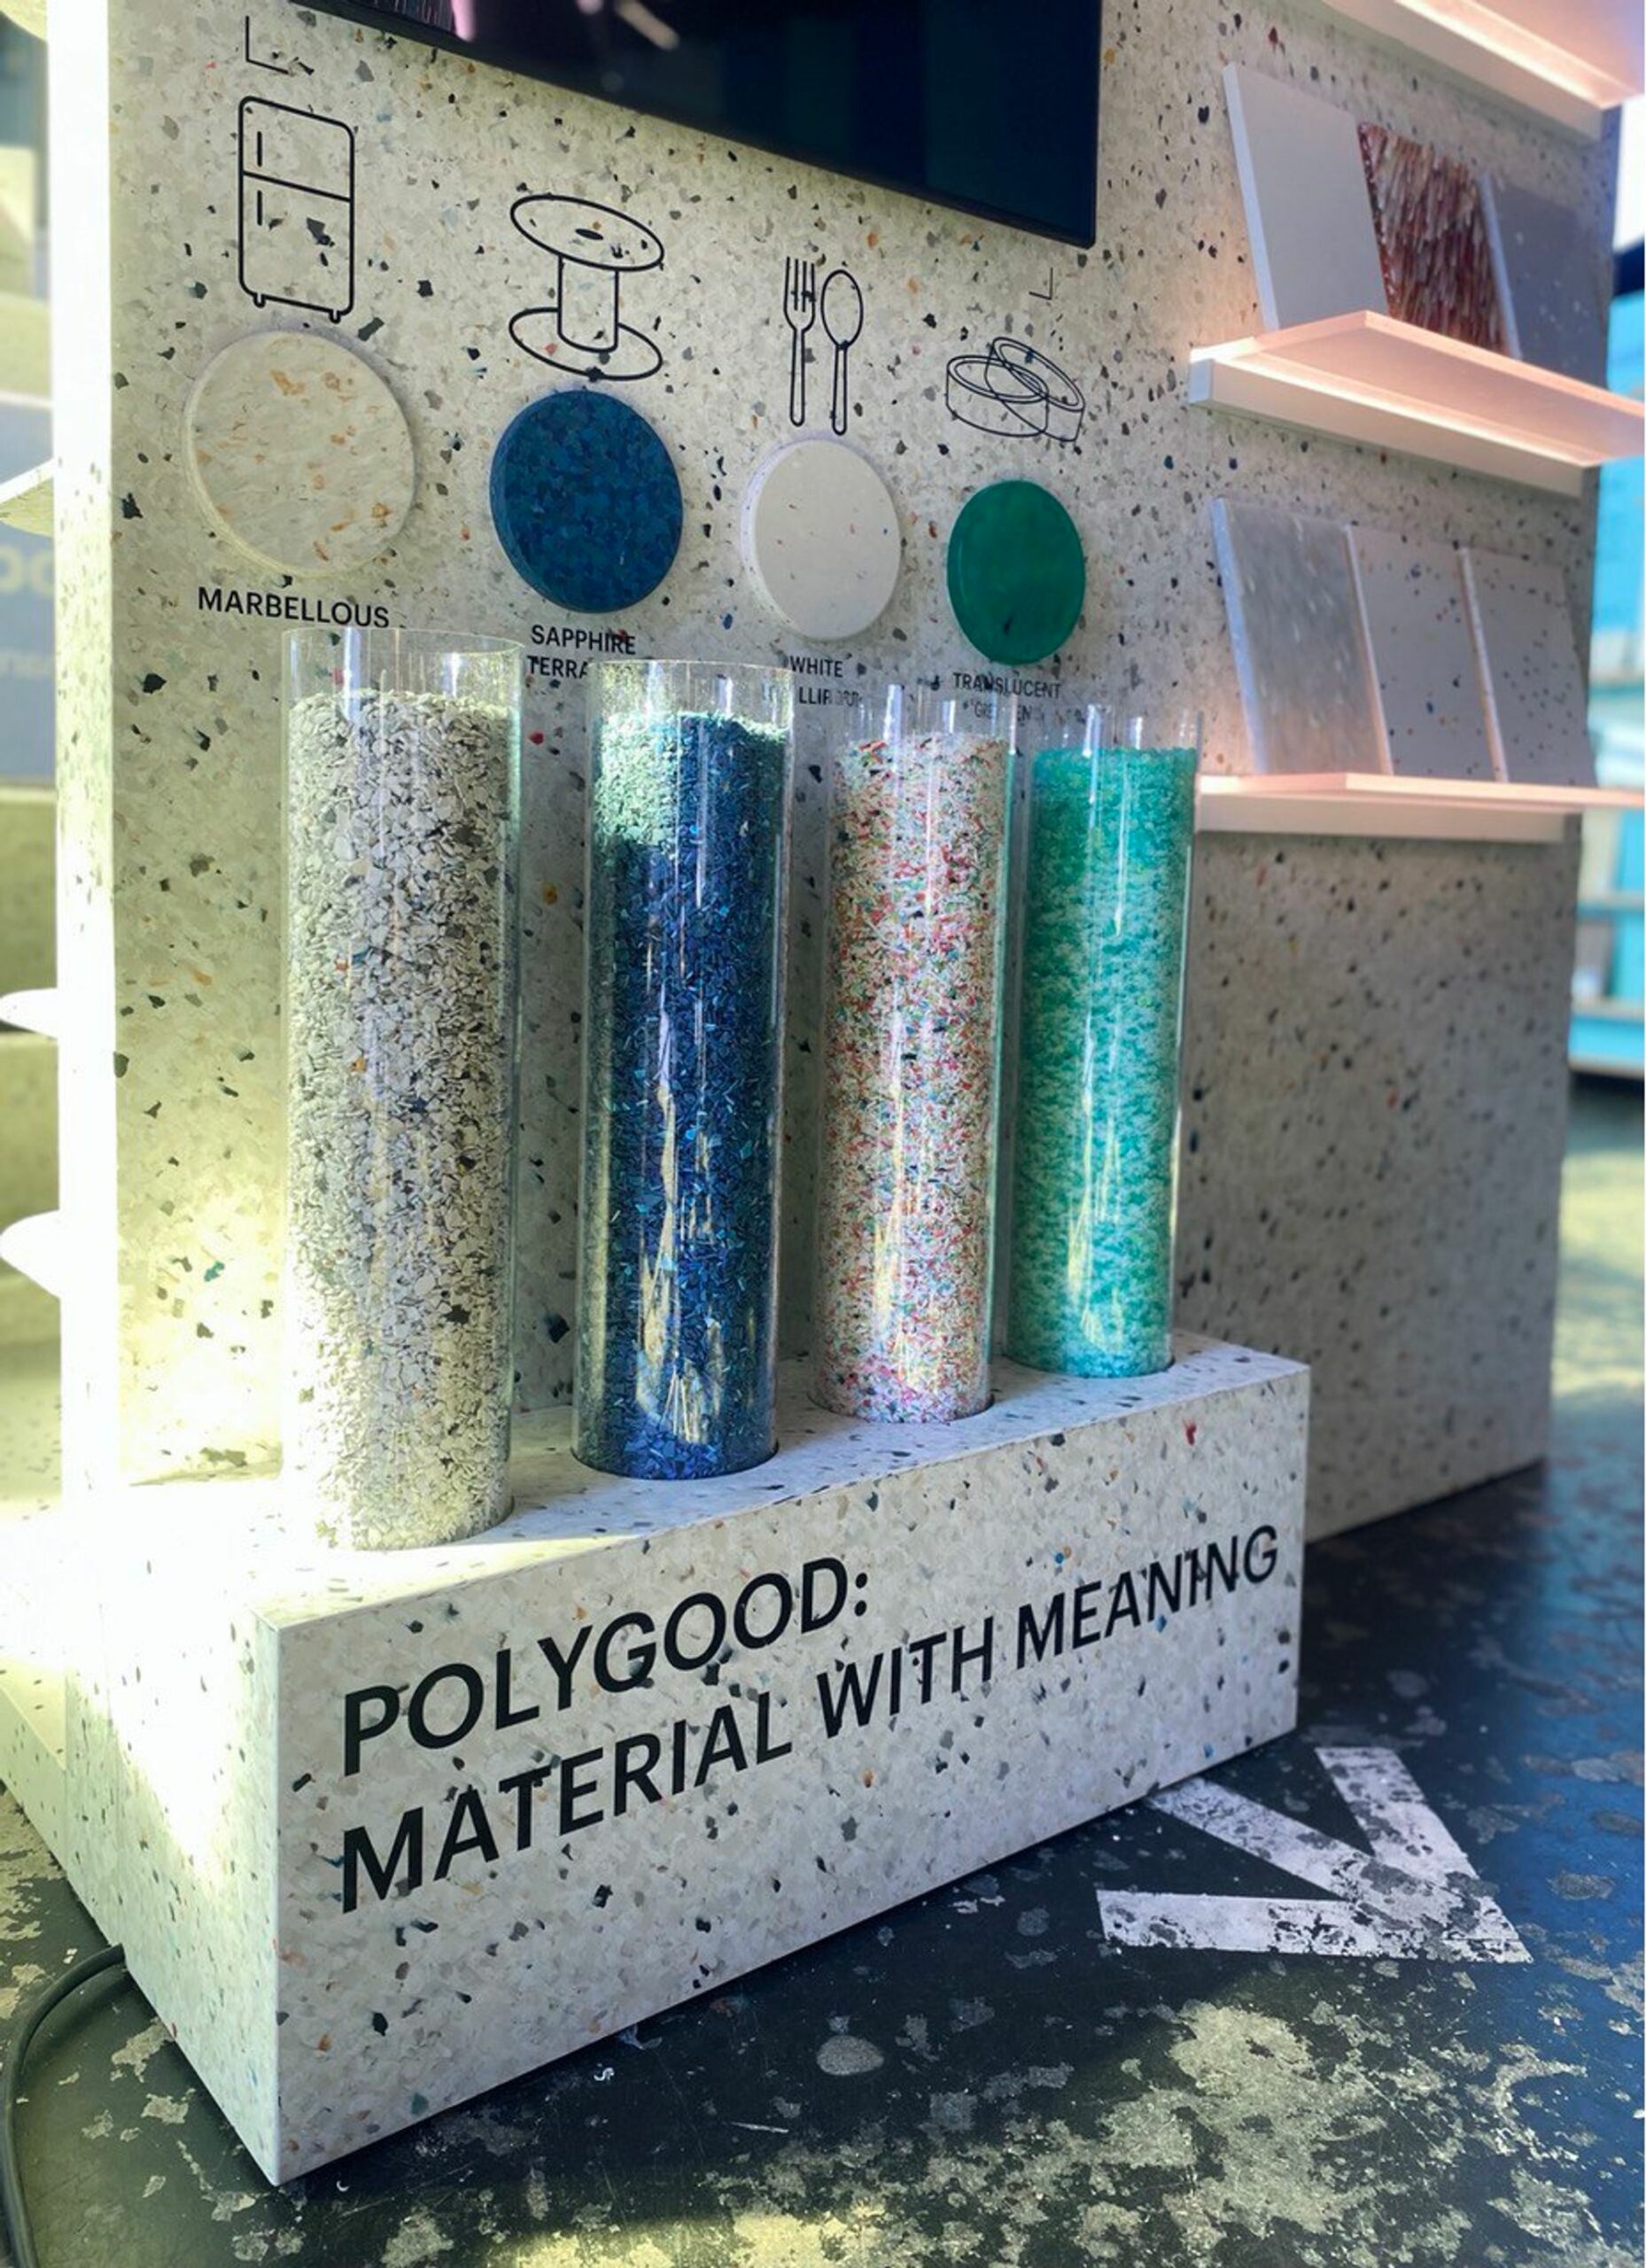 Projet Amsterdam - plastique recyclé innovant - Polygood®